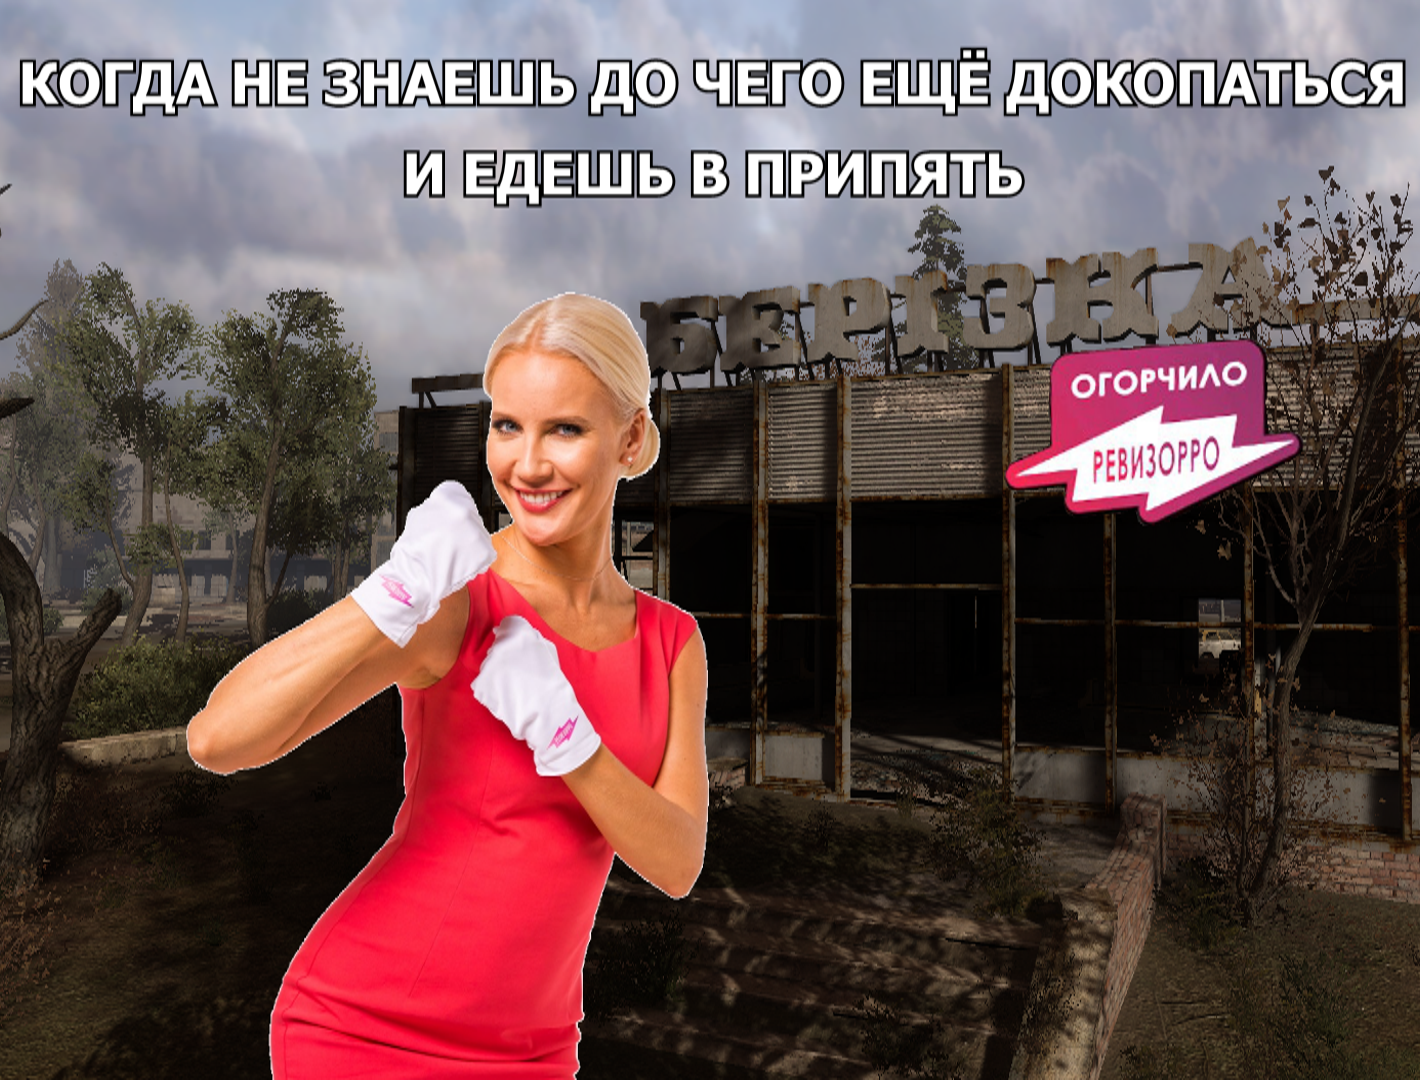 Revizorro in Pripyat (no swearing) - Revizorro, Humor, Pripyat, Chagrin, Elena Flying